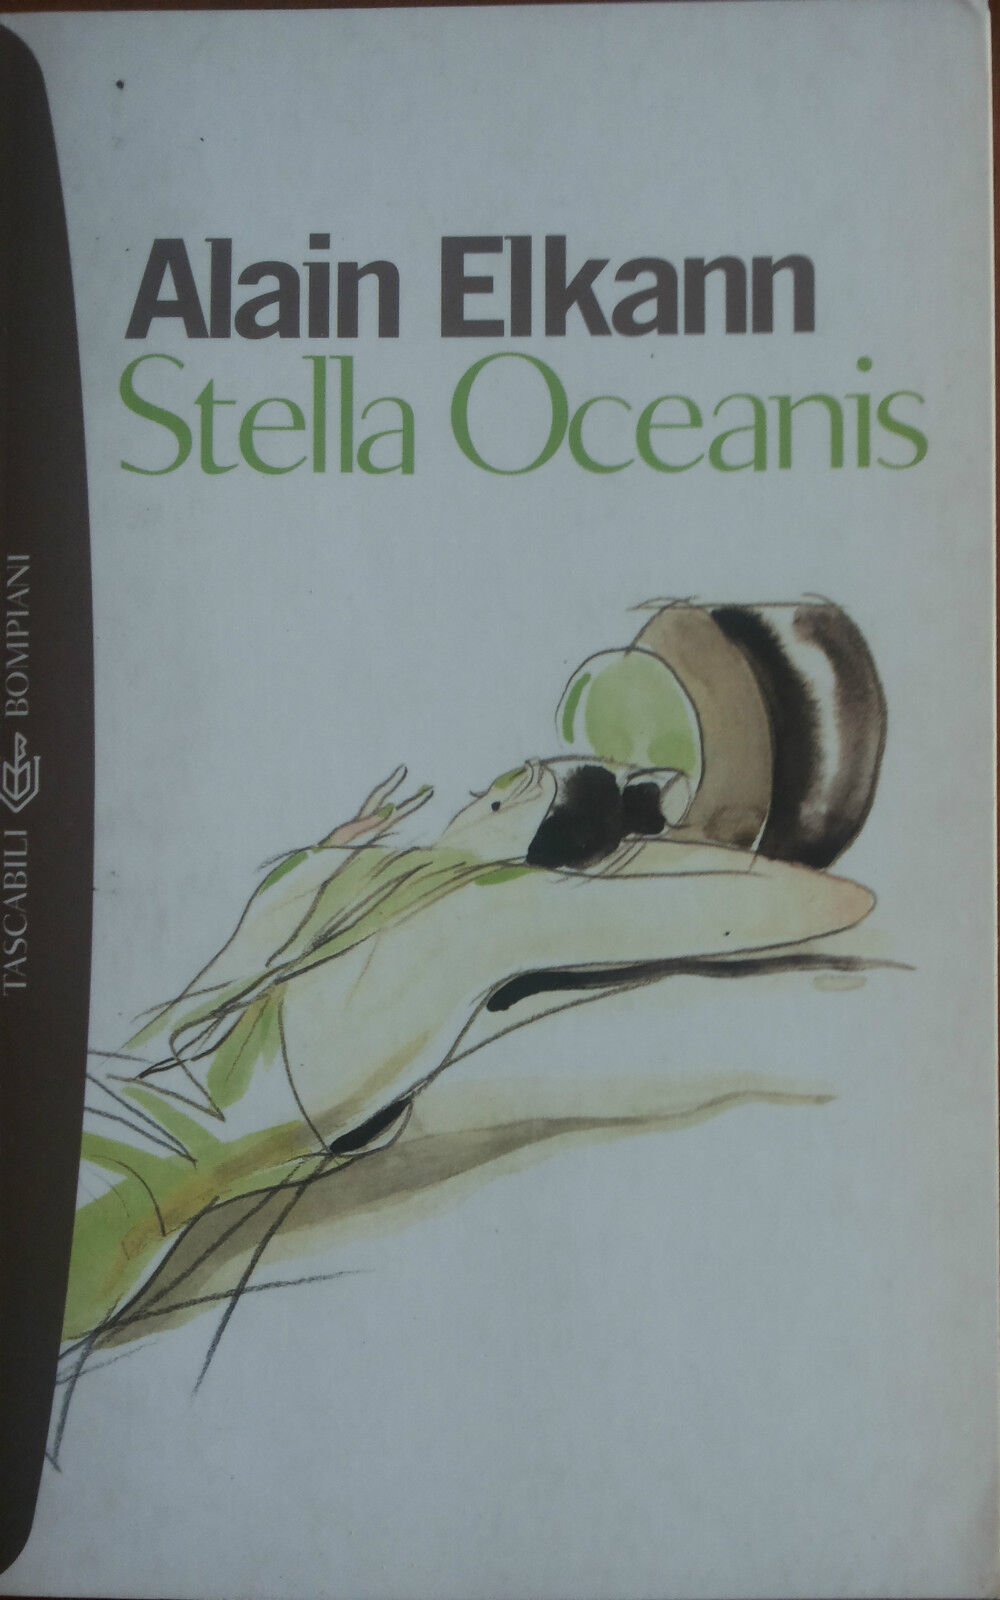 Stella Oceanis - Alain Elkann - Bompiani,2004 - A